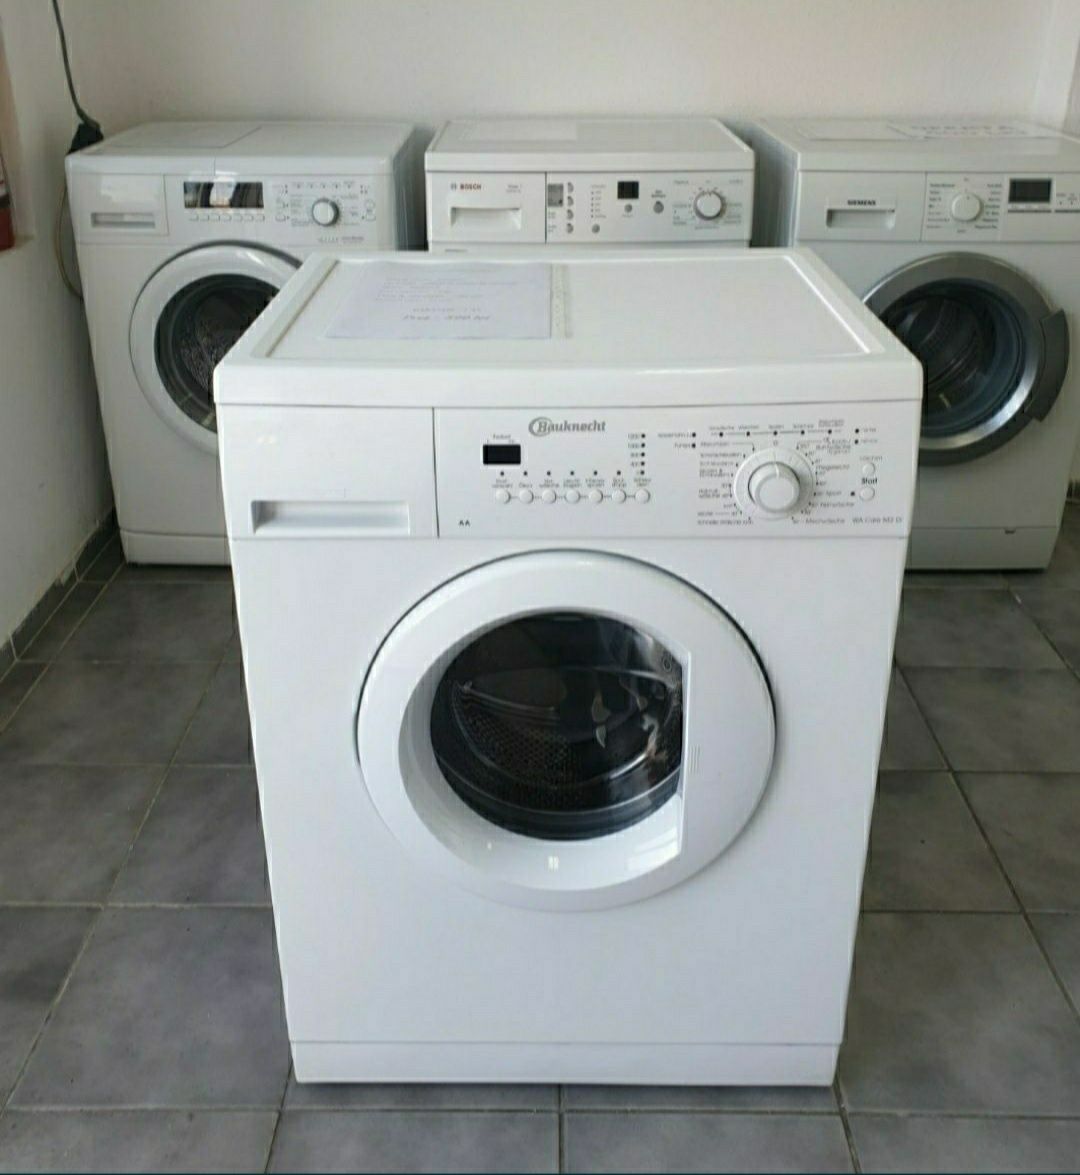 Masina de spălat rufe Bauknecht,  wa 5443